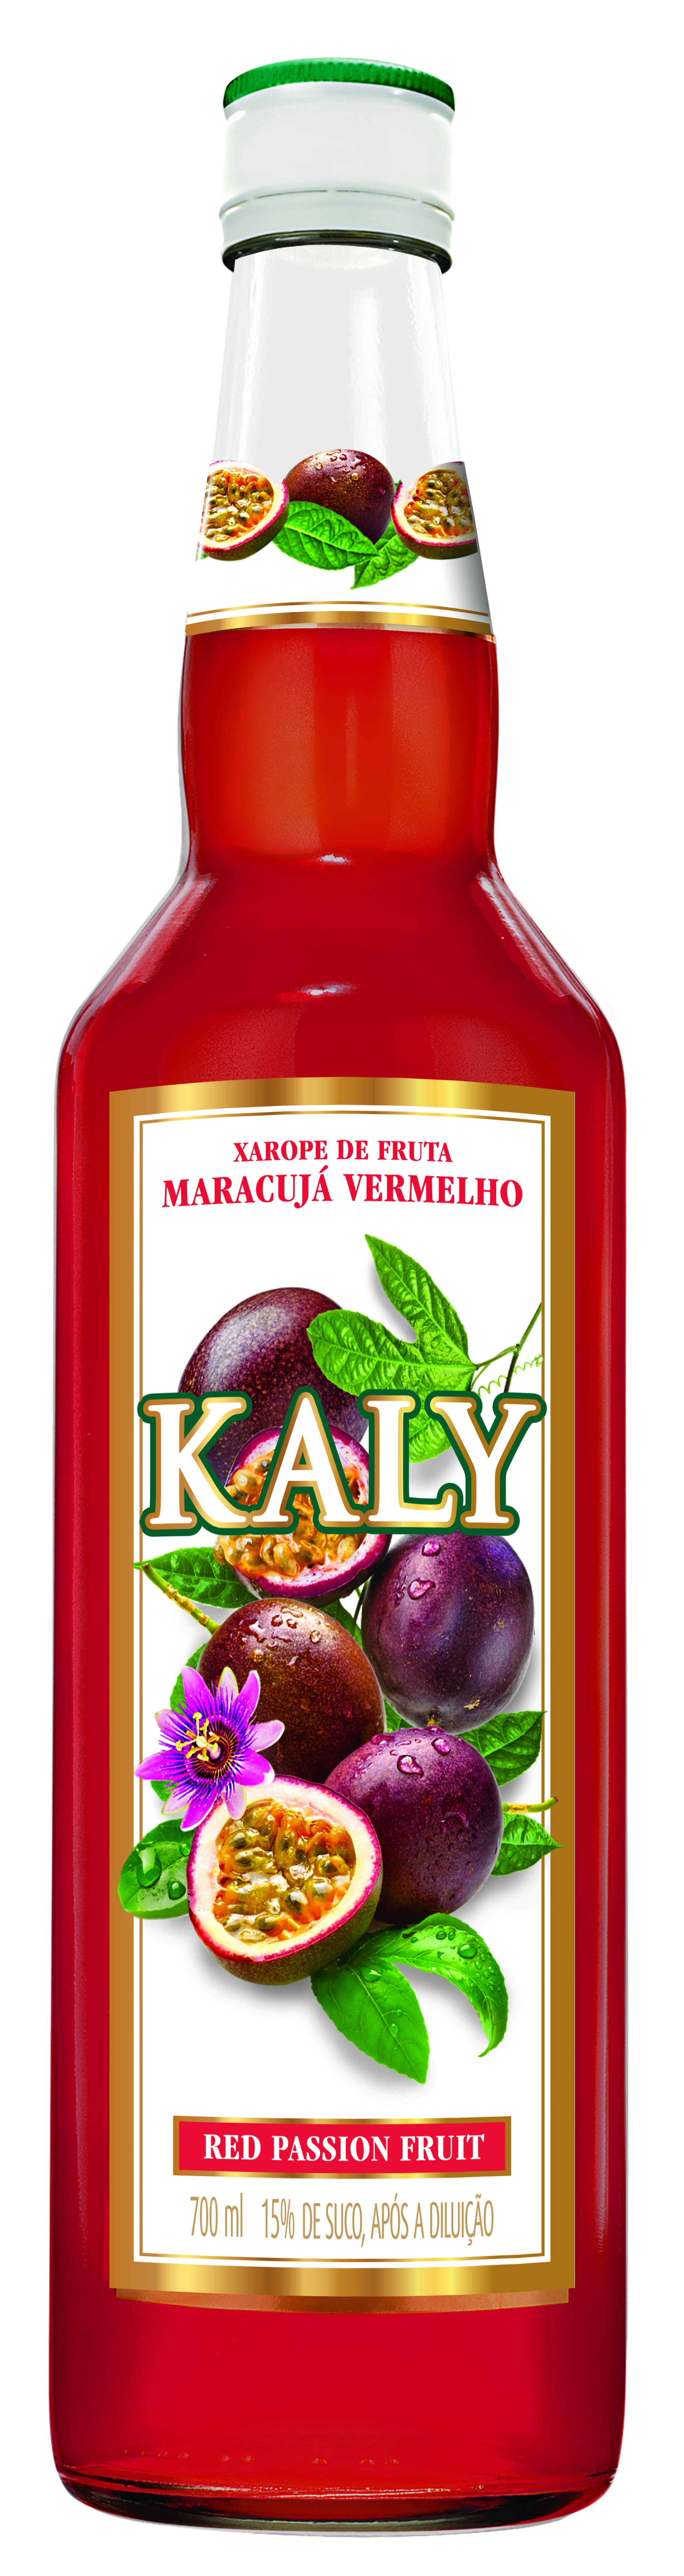 DISTILLERIE STOCK DO BRASIL LTDA's Kaly natural syrup